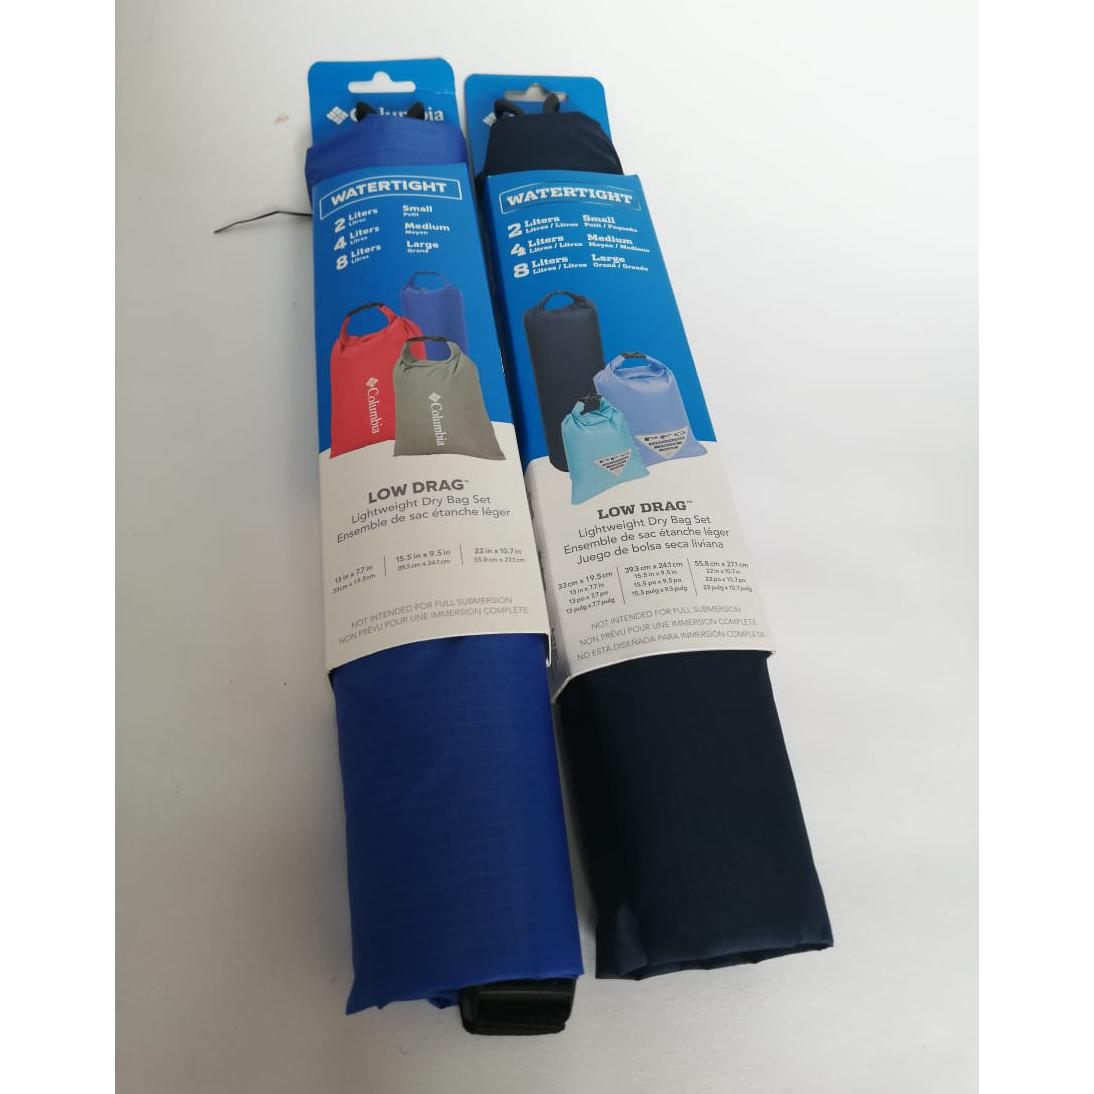 Bolsa seca Columbia PFG (Dry bags) set de 3 unid, colores azul oscuro, lila y celeste. - The Gift Shop Costa Rica